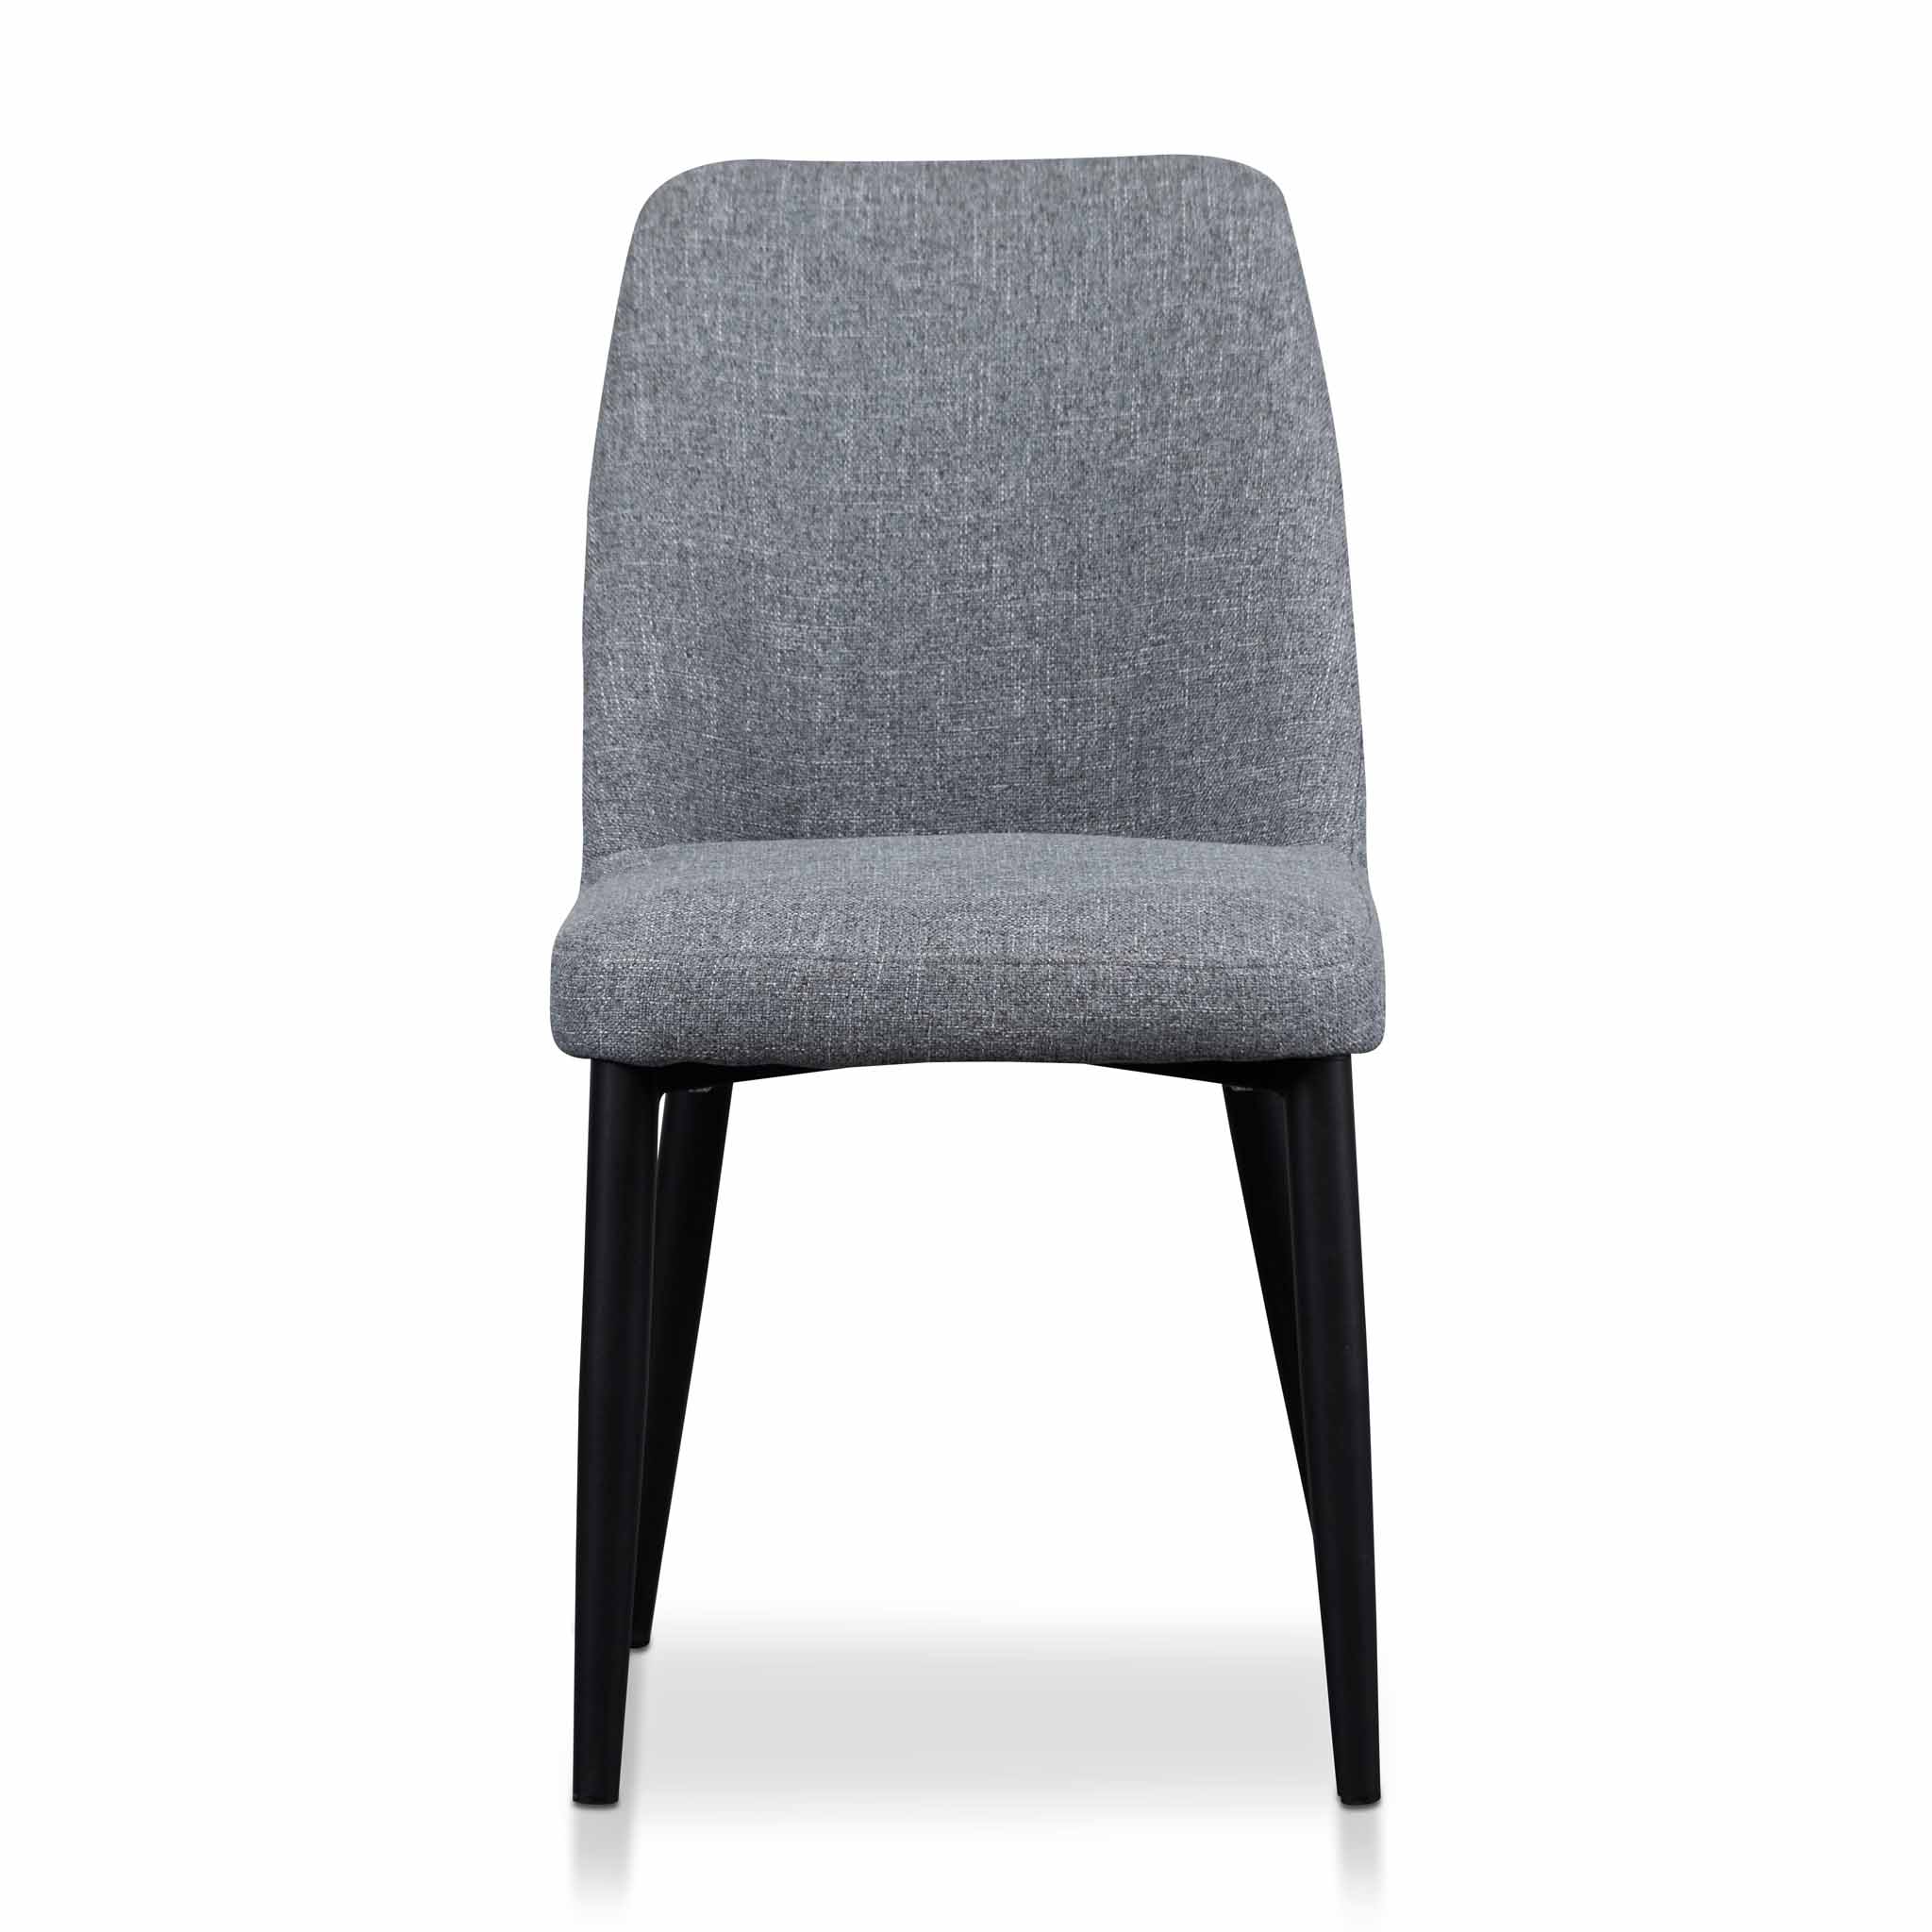 Emmitt Fabric Dining Chair - Pebble Grey in Black Legs (Set of 2)